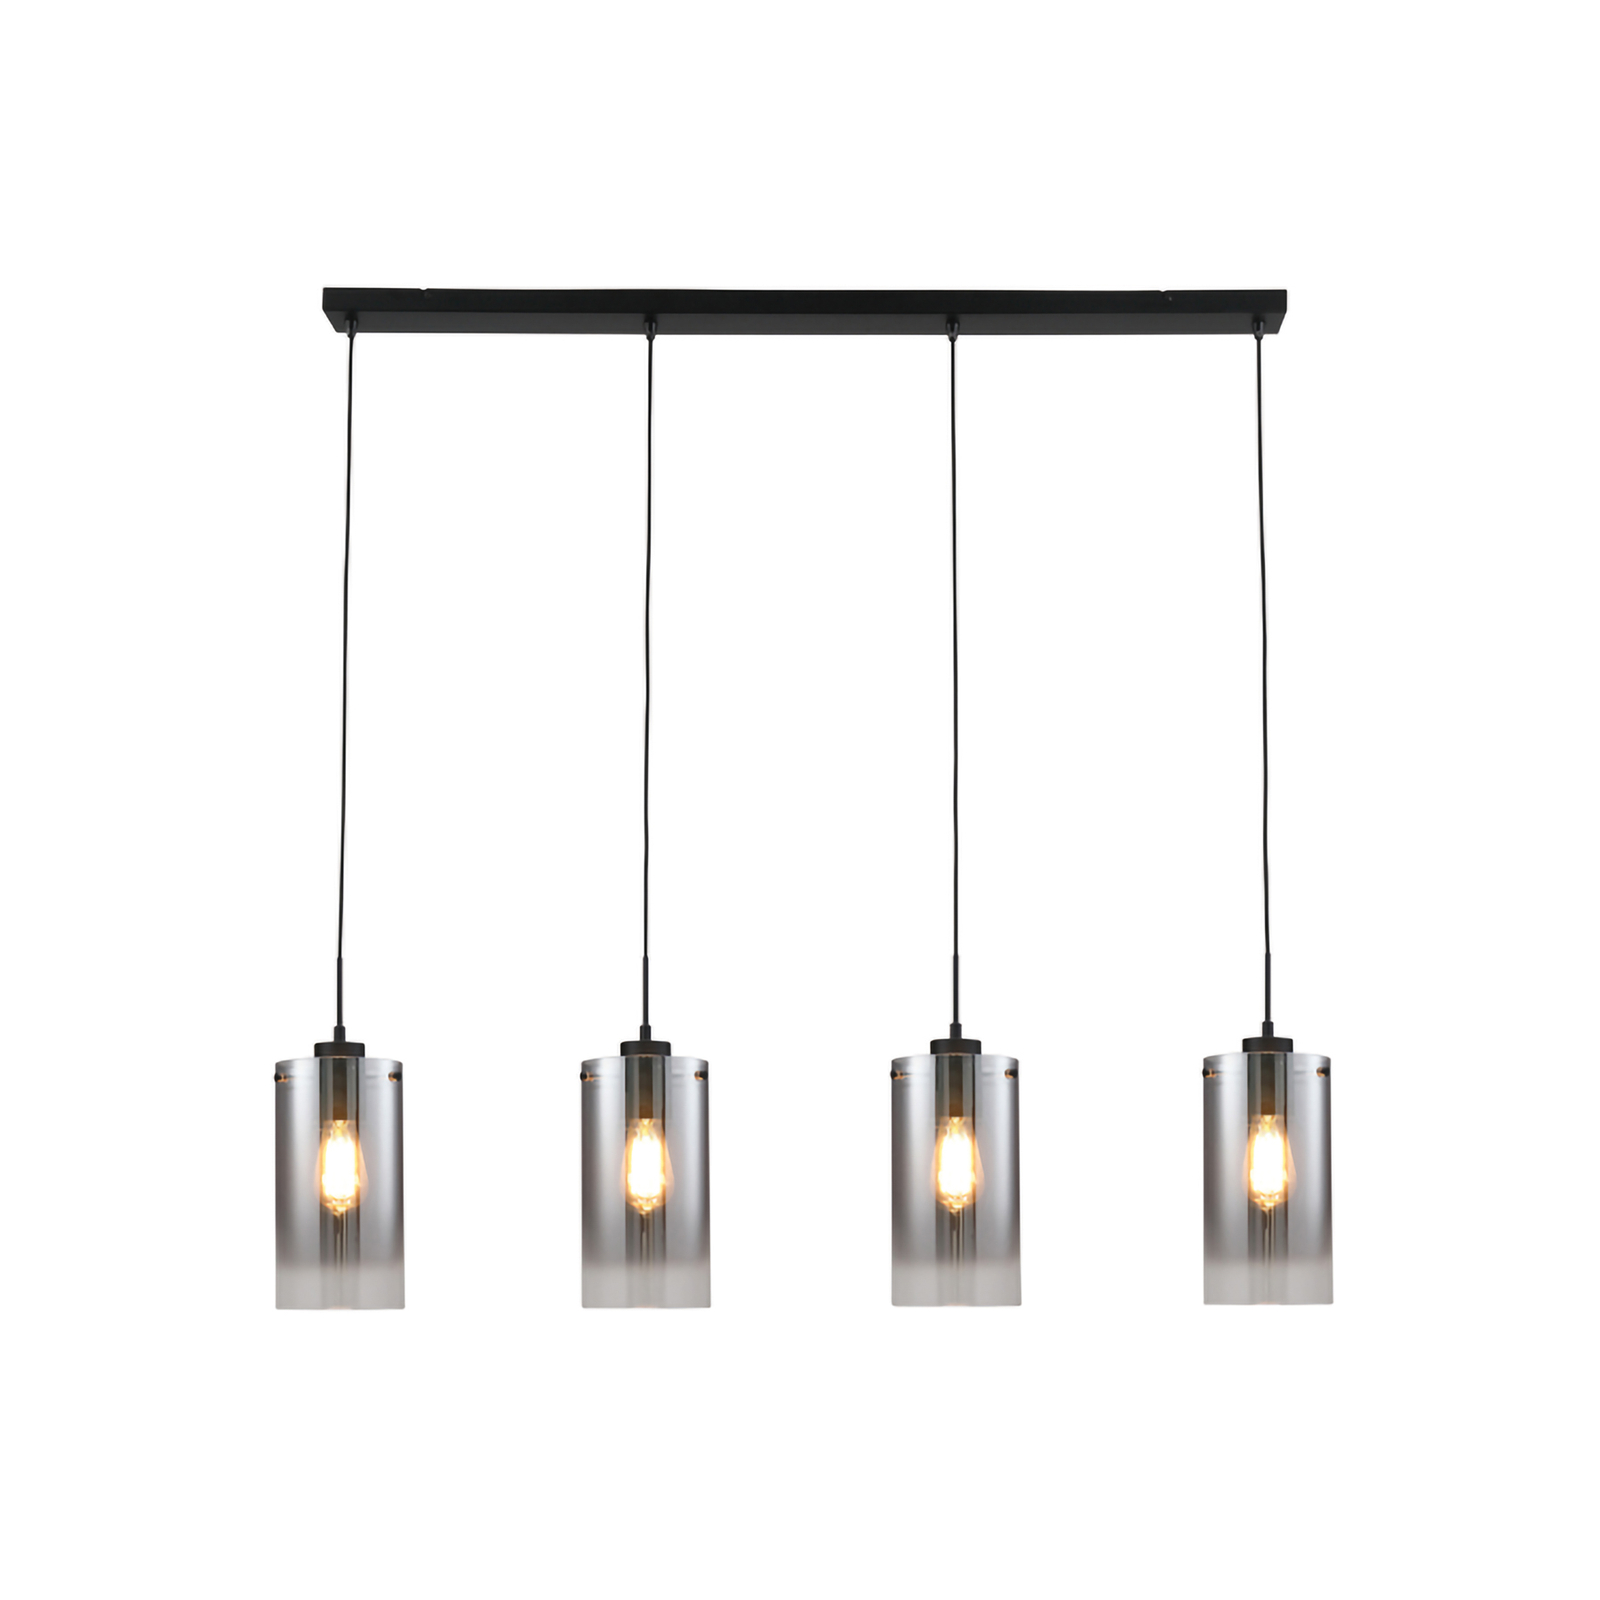 Ventotto hanglamp, zwart/rook, lengte 125 cm, 4-lamps.